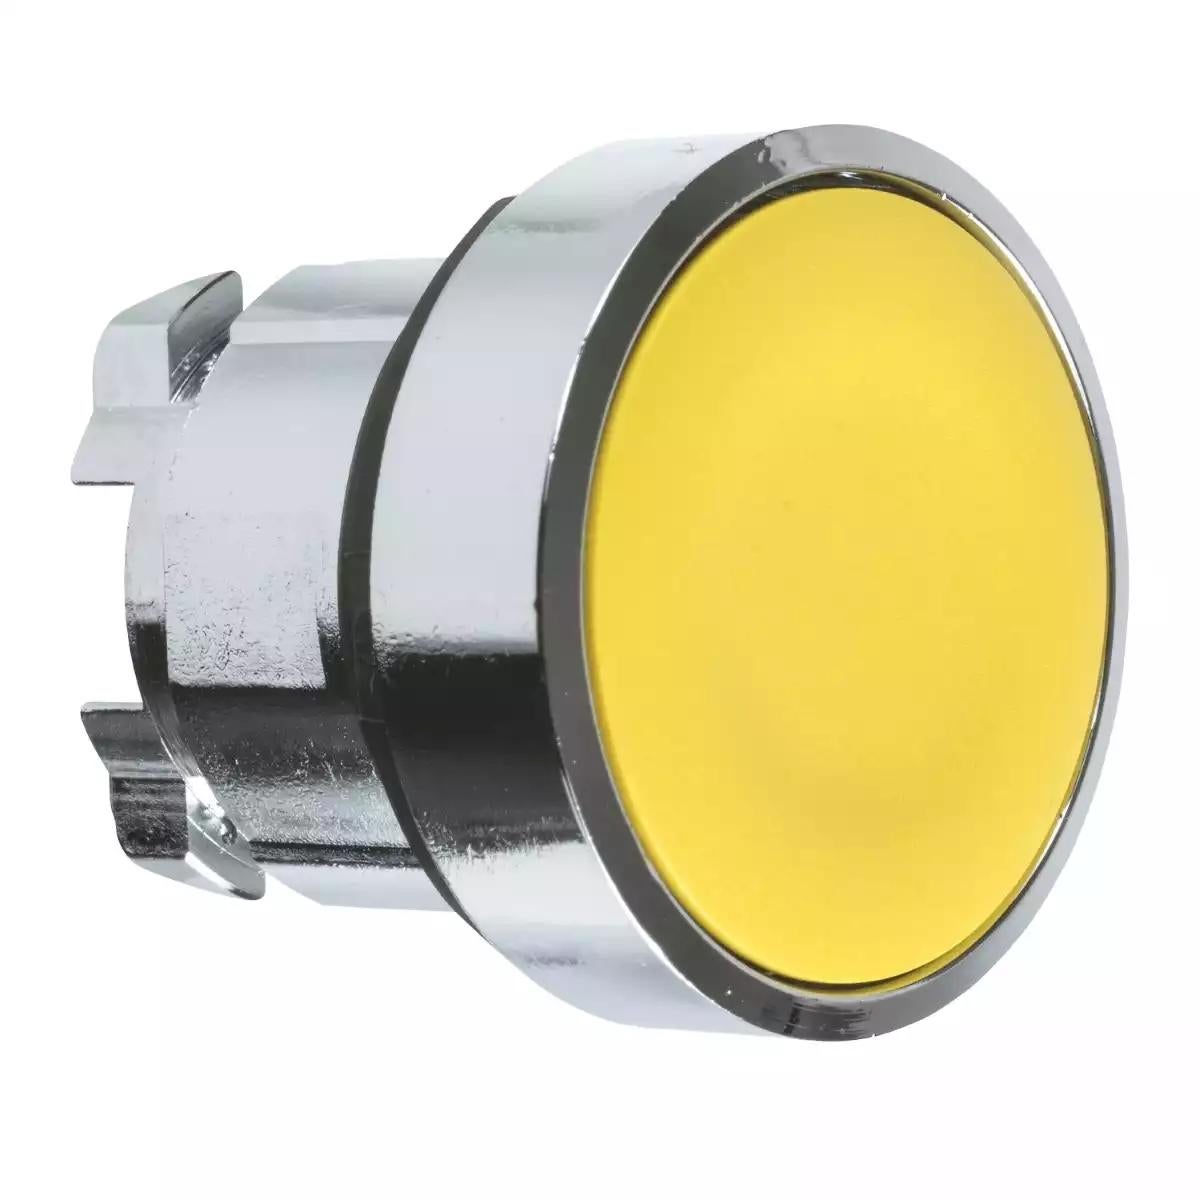 Push button head, Harmony XB4, metal, flush, yellow, 22mm, spring return, unmarked